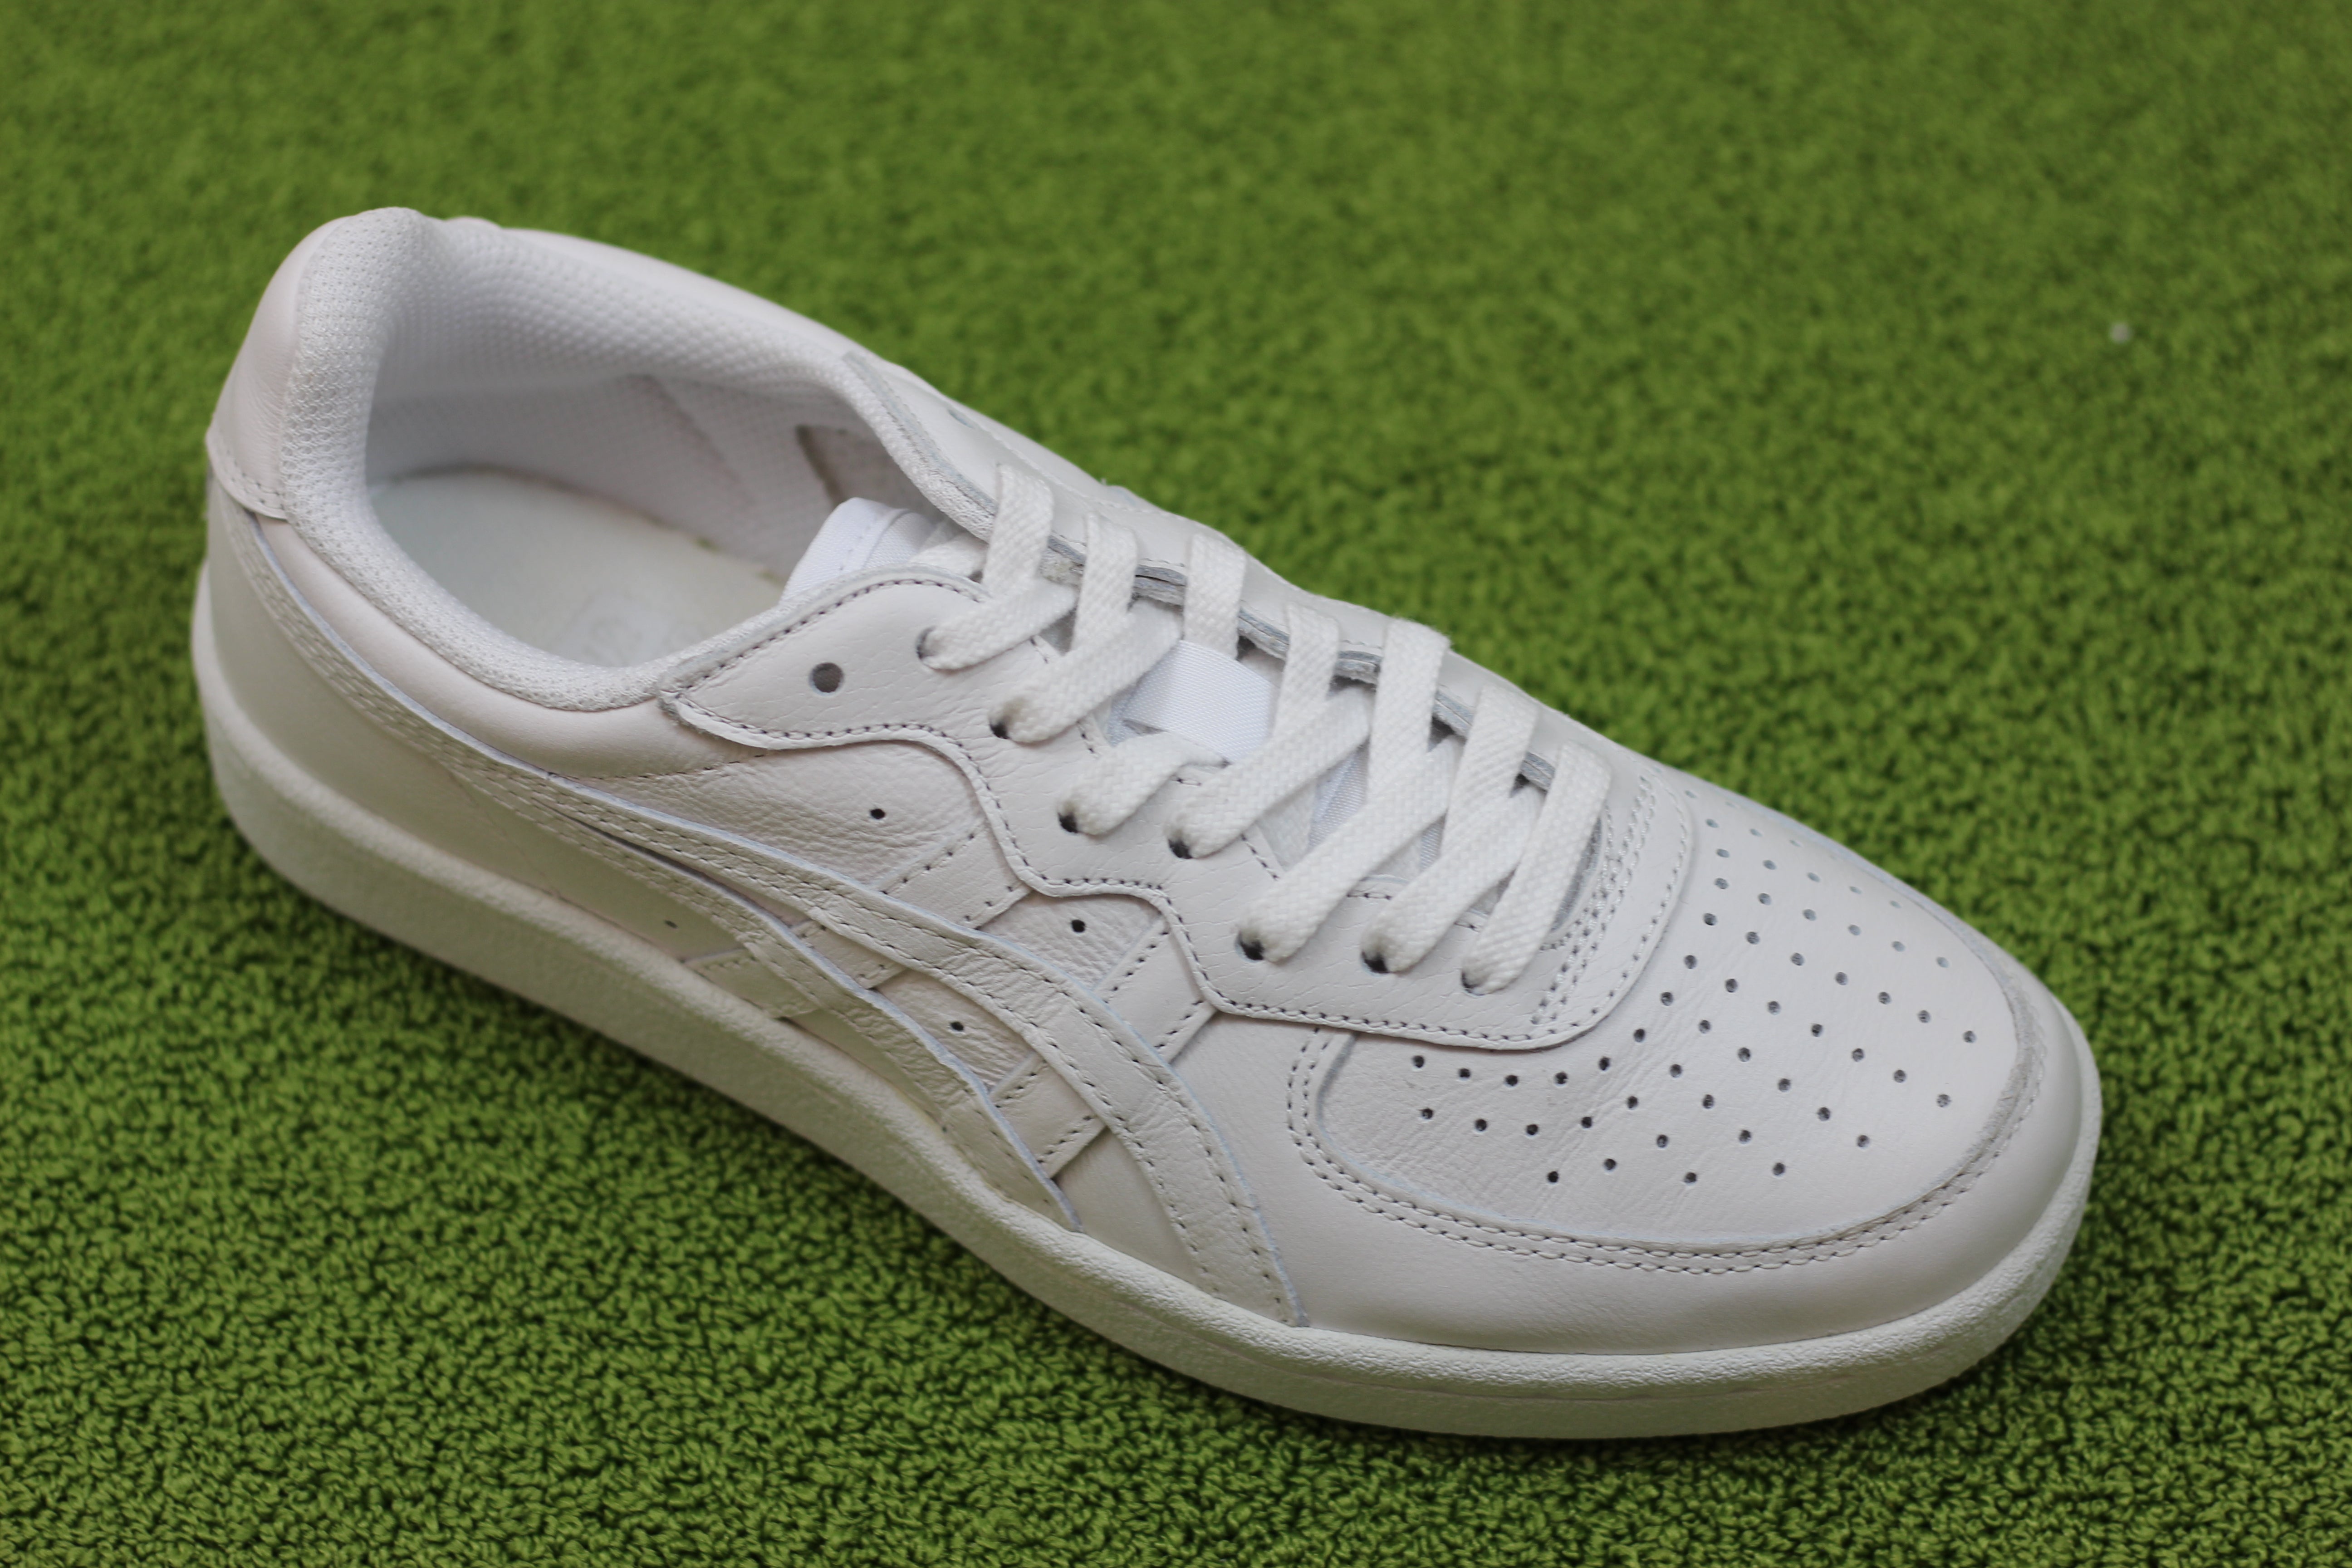 mave Stoop lindring Onitsuka Tiger GSM Sneaker - White Leather